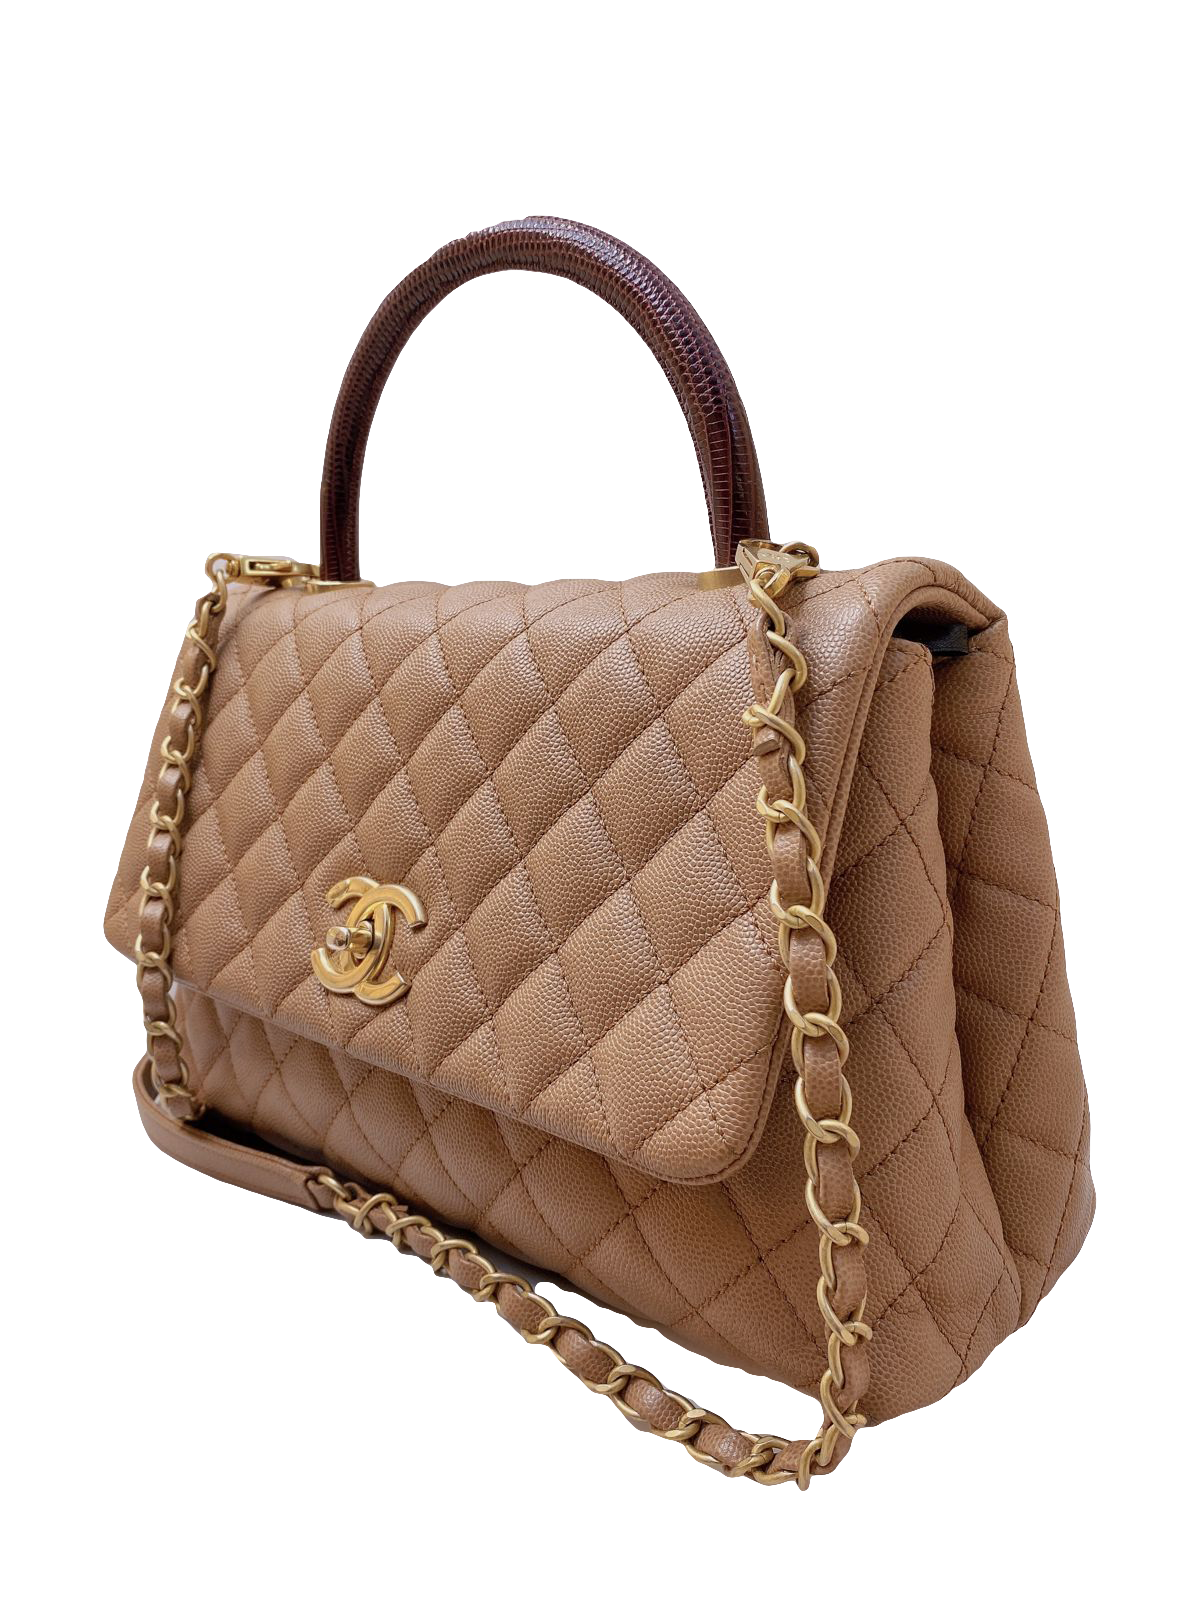 SOLD* 1730-1168 Beige/Burgundy Lizard Leather 29cm Coco Handle Bag